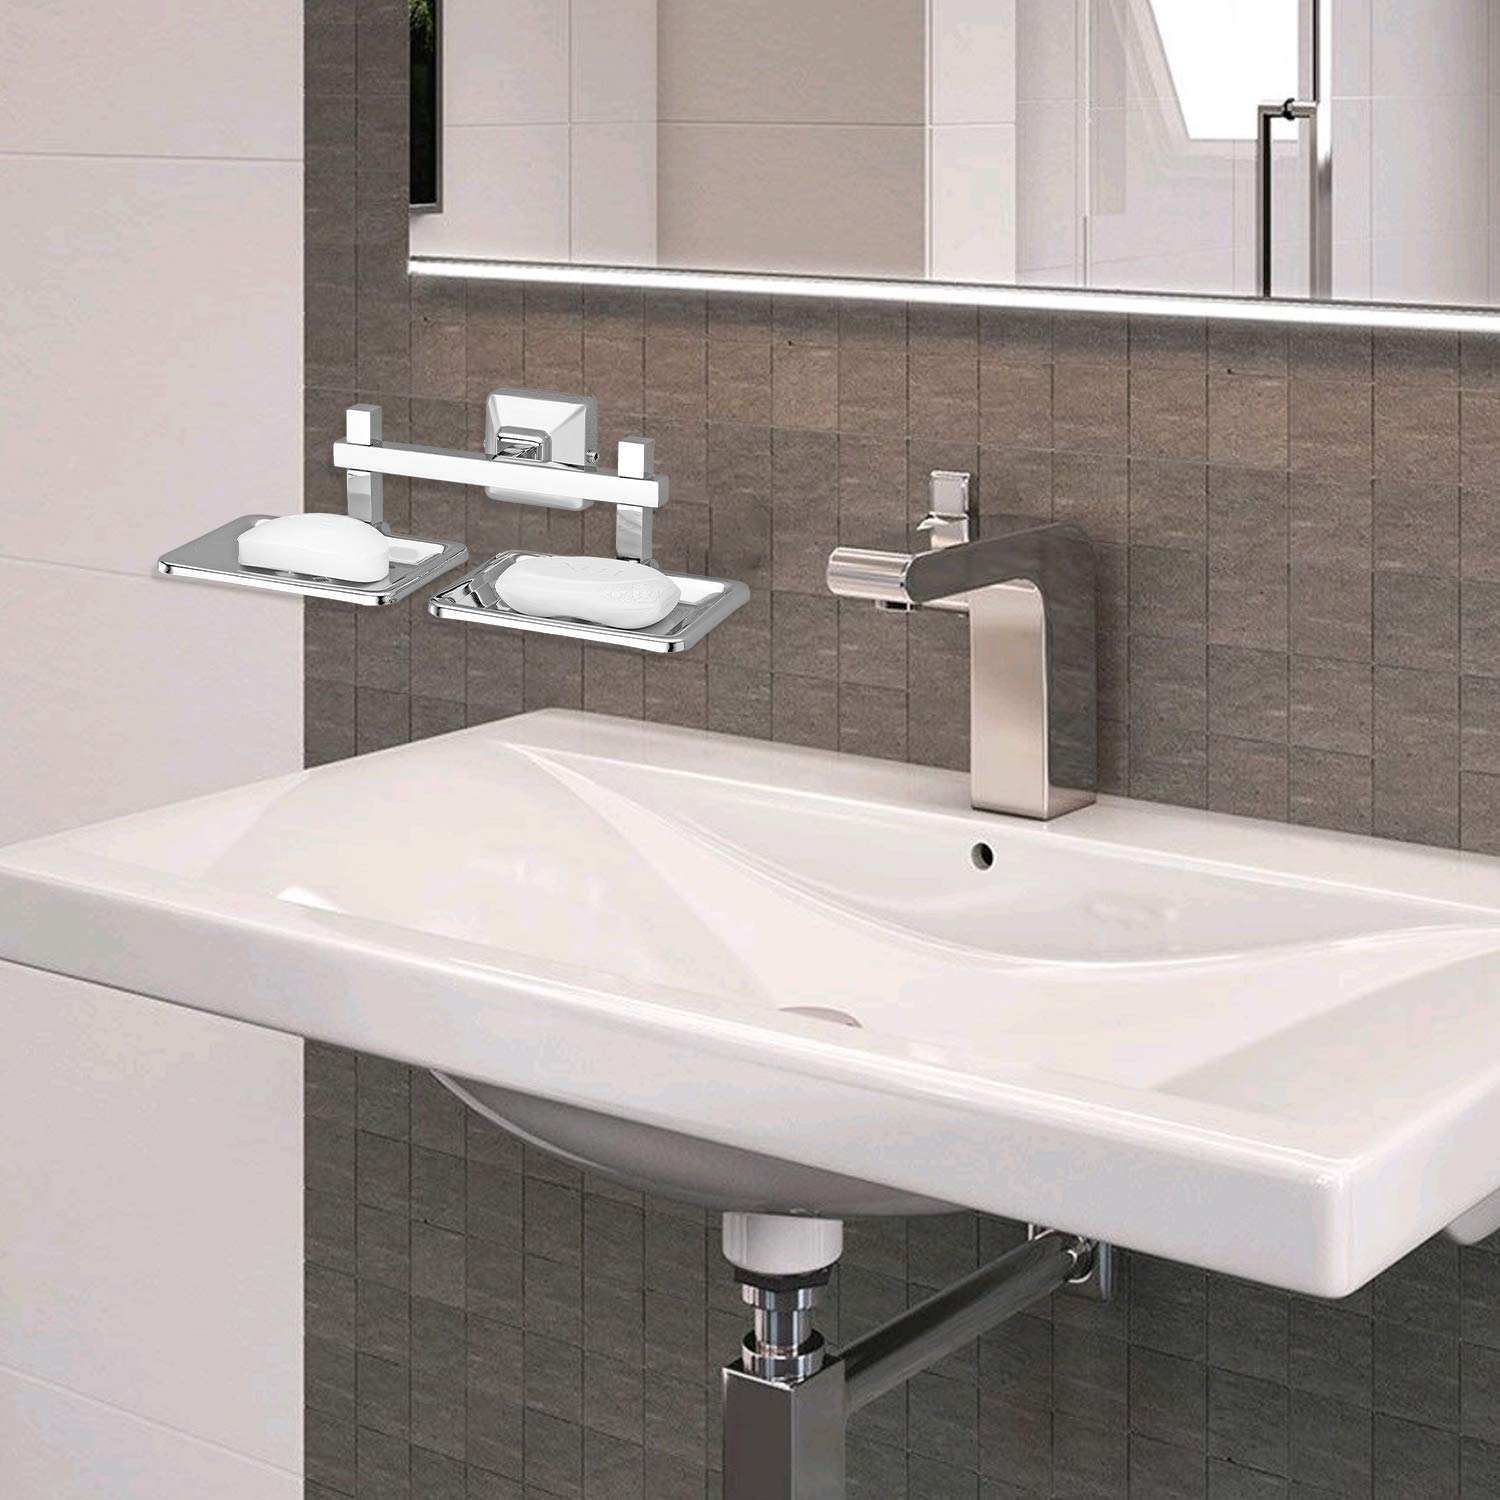 Plantex Stainless Steel 304 Grade Squaro Soap Holder for Bathroom/Double Soap Dish(Chrome) - Pack of 2